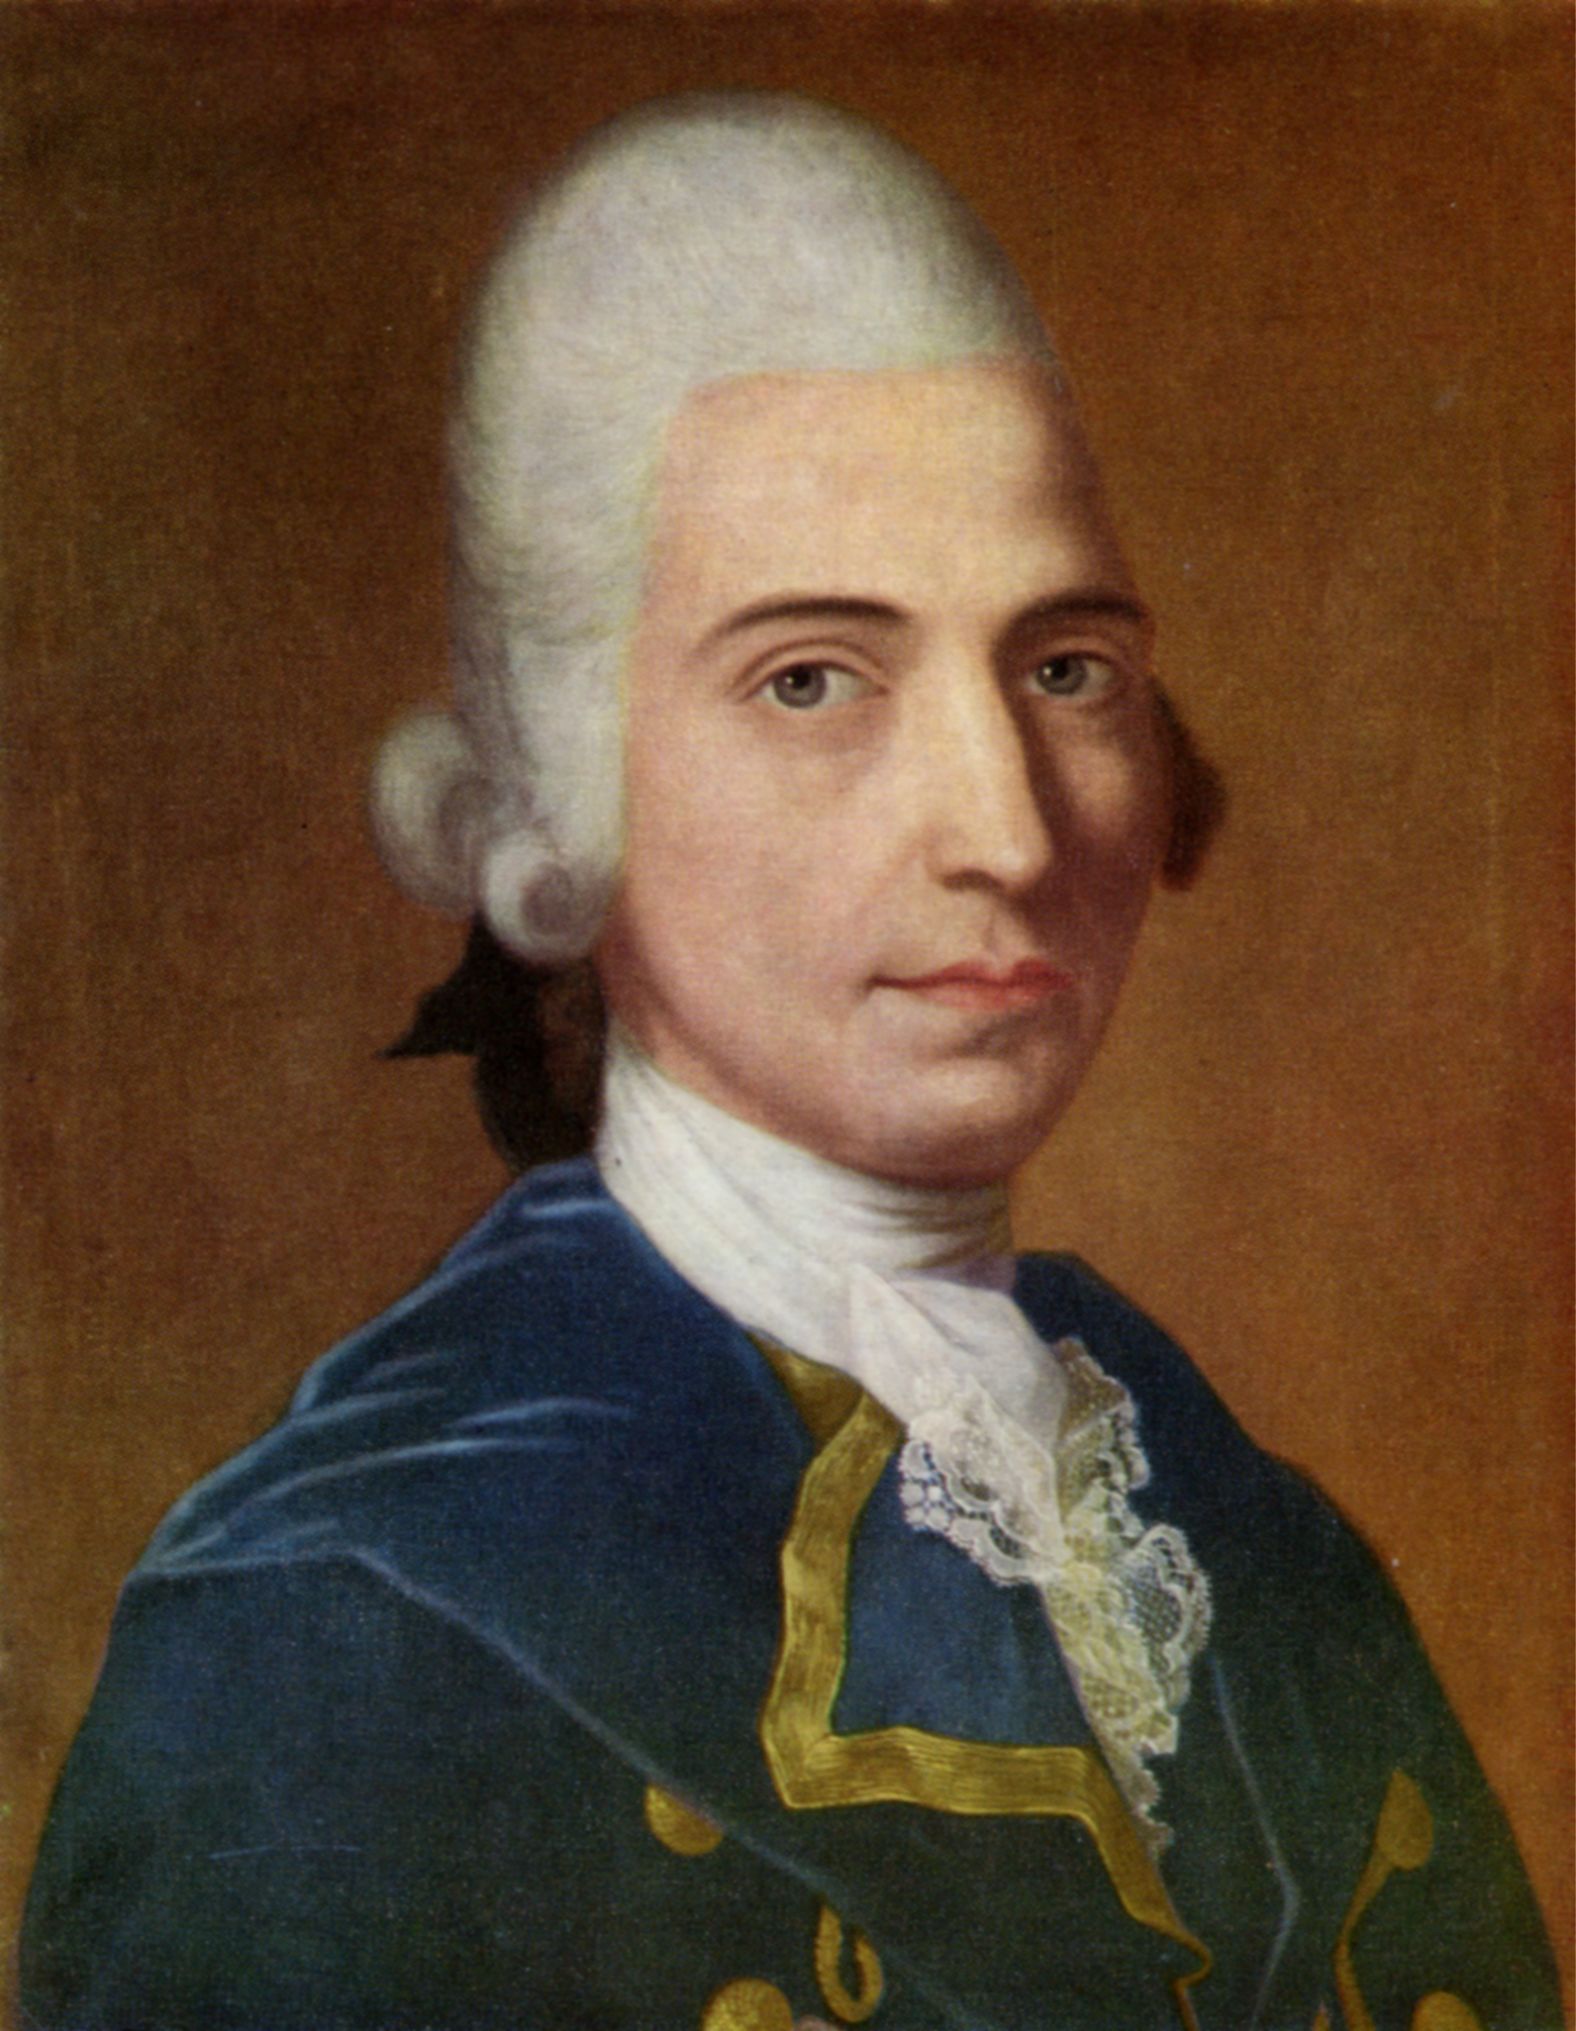 Portre of Bürger, Gottfried August